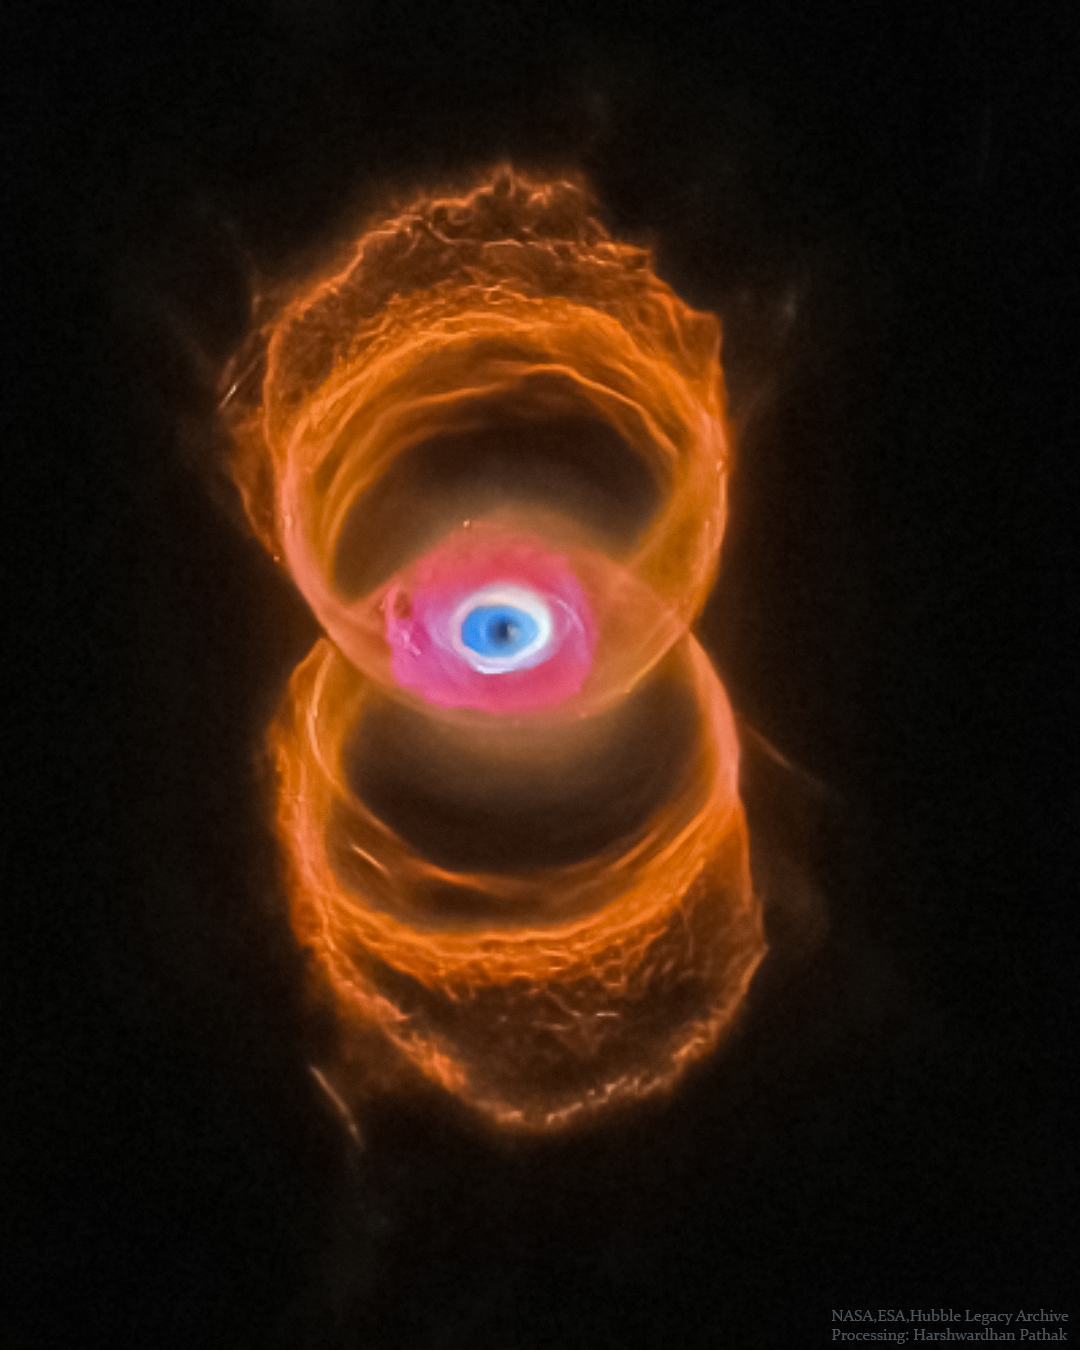 MyCn 18: La nebulosa planetaria del reloj de arena grabado